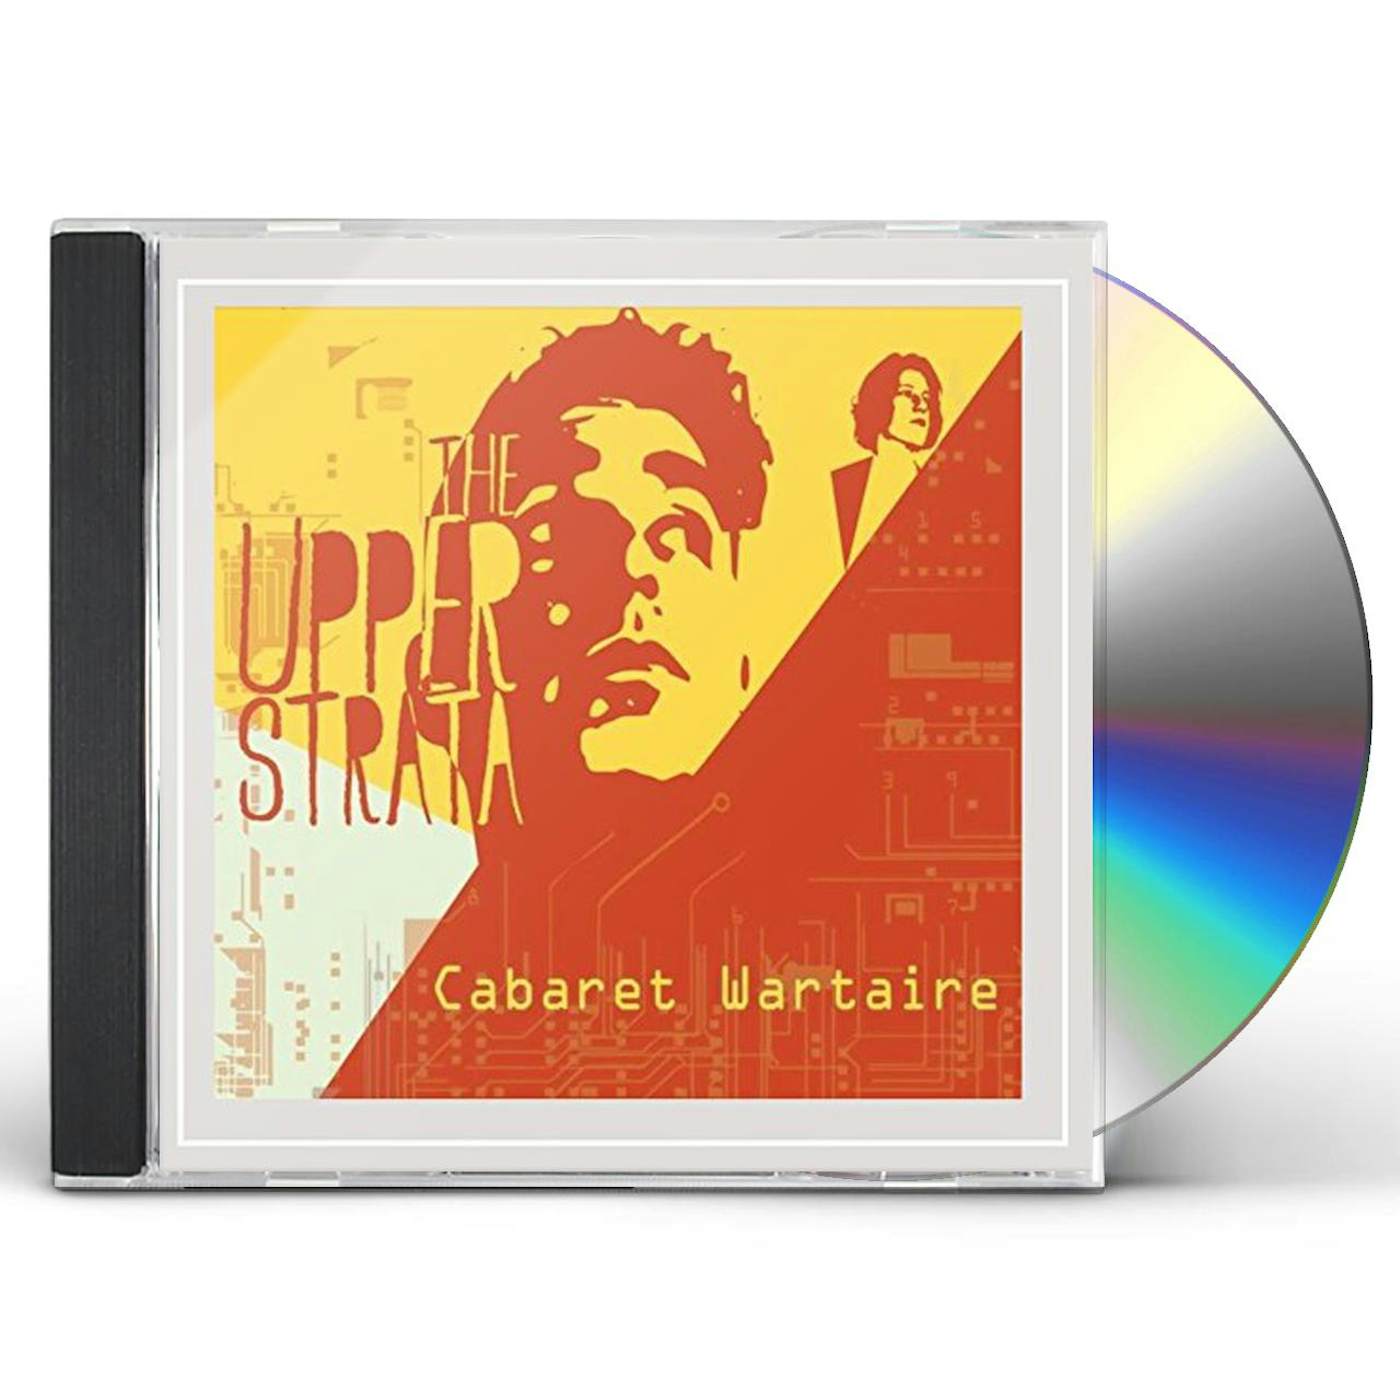 The Upper Strata CABARET WARTAIRE CD